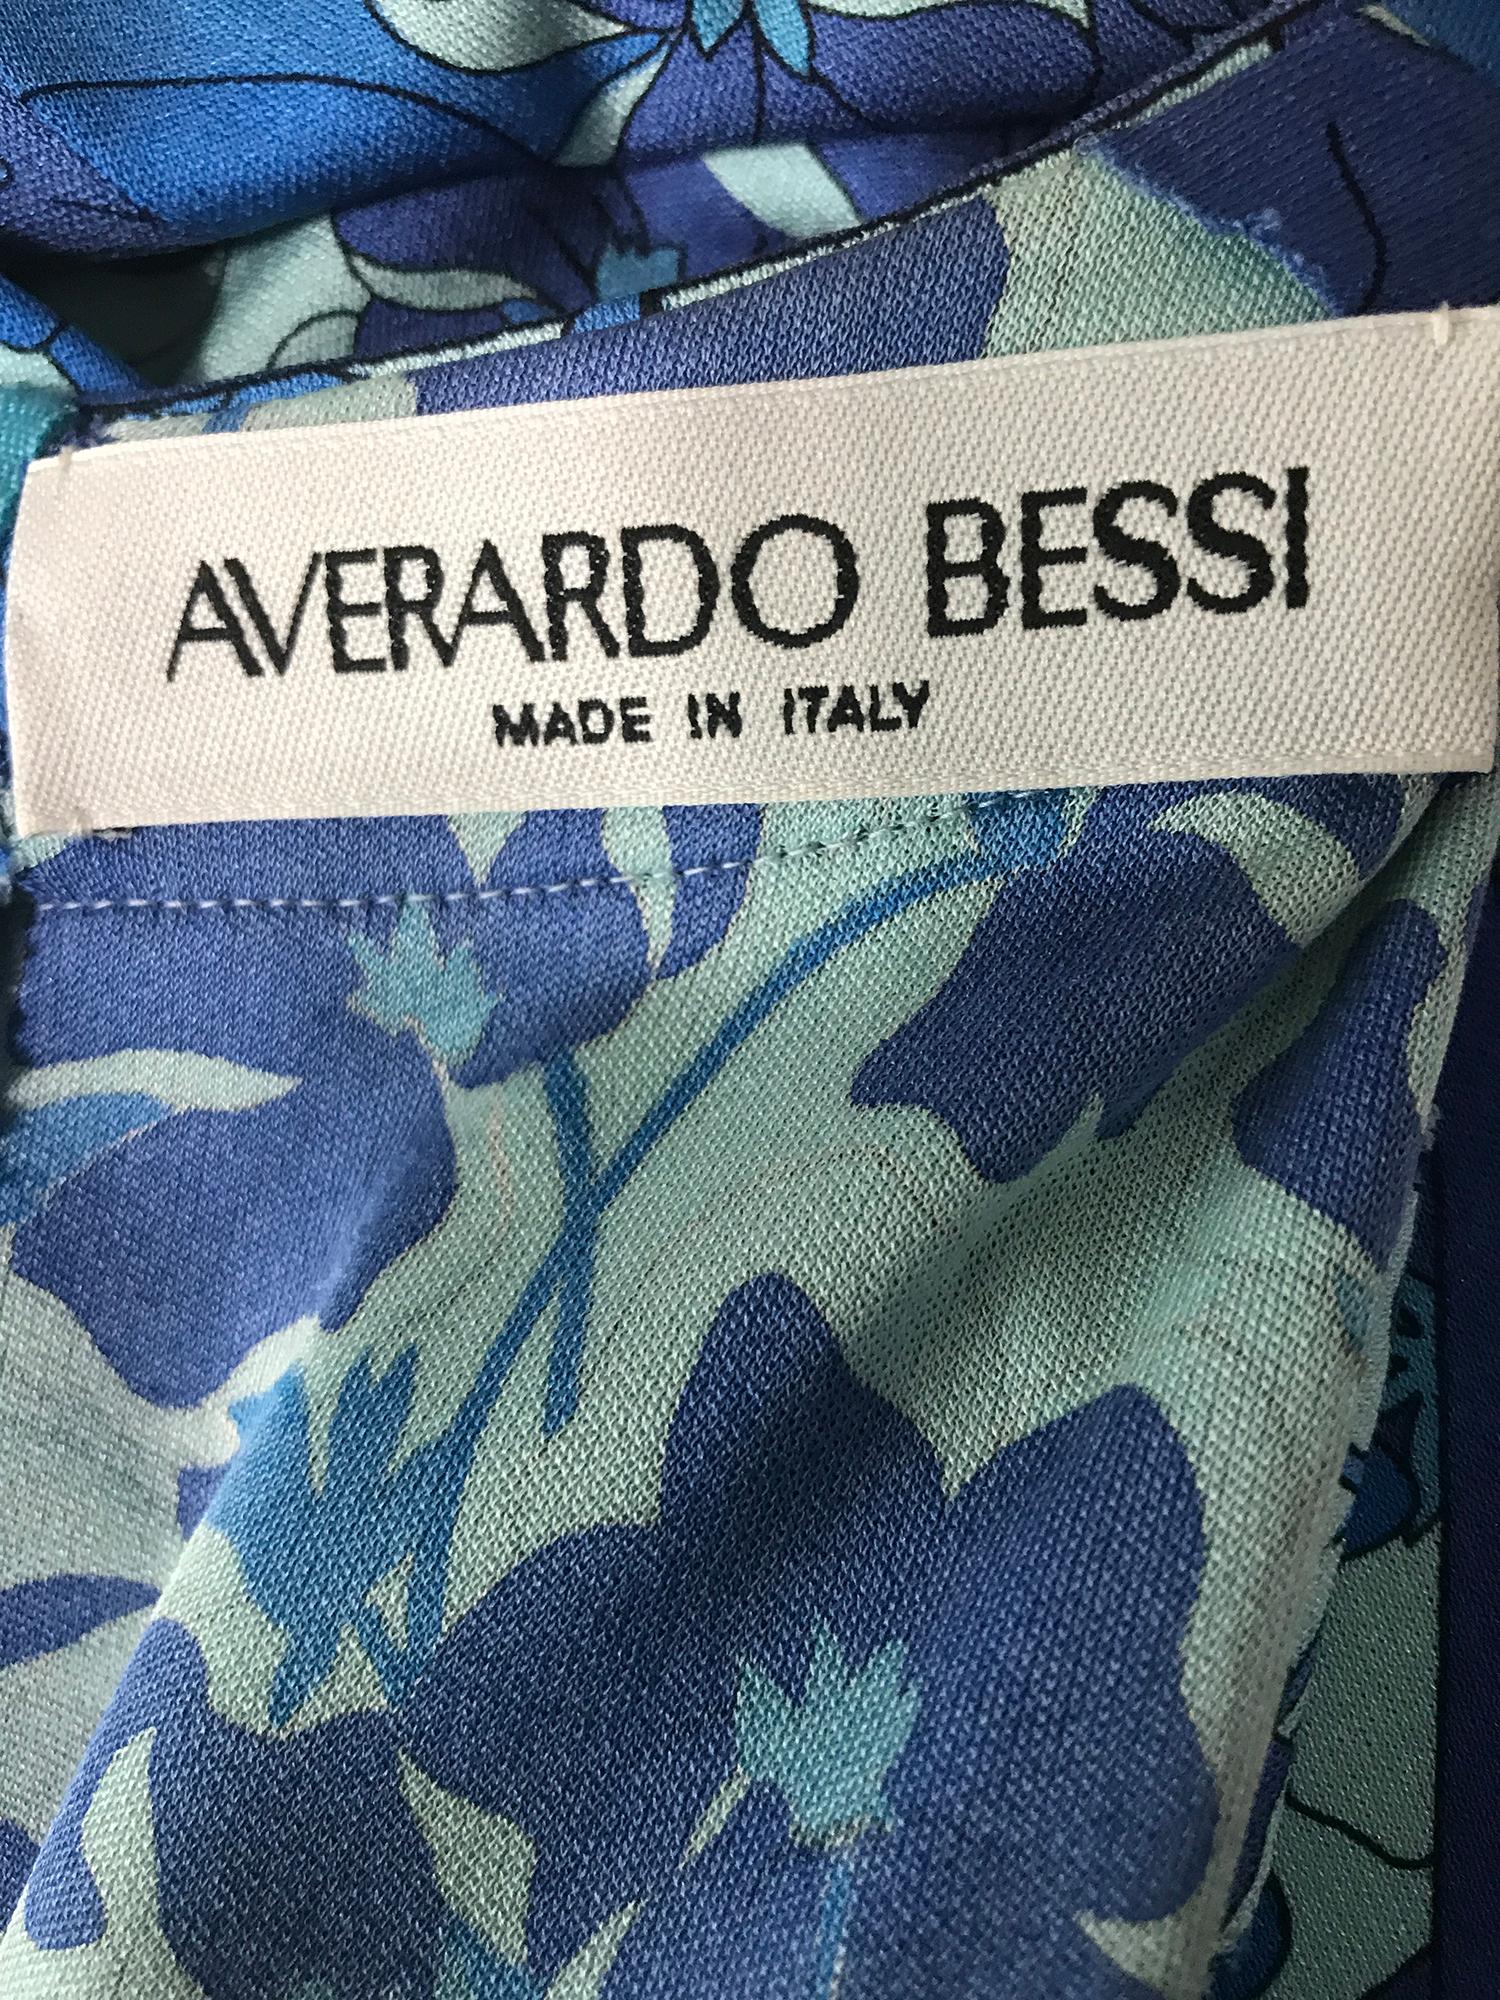 Vintage Averado Bessi Silk Print Dress and Belt 9